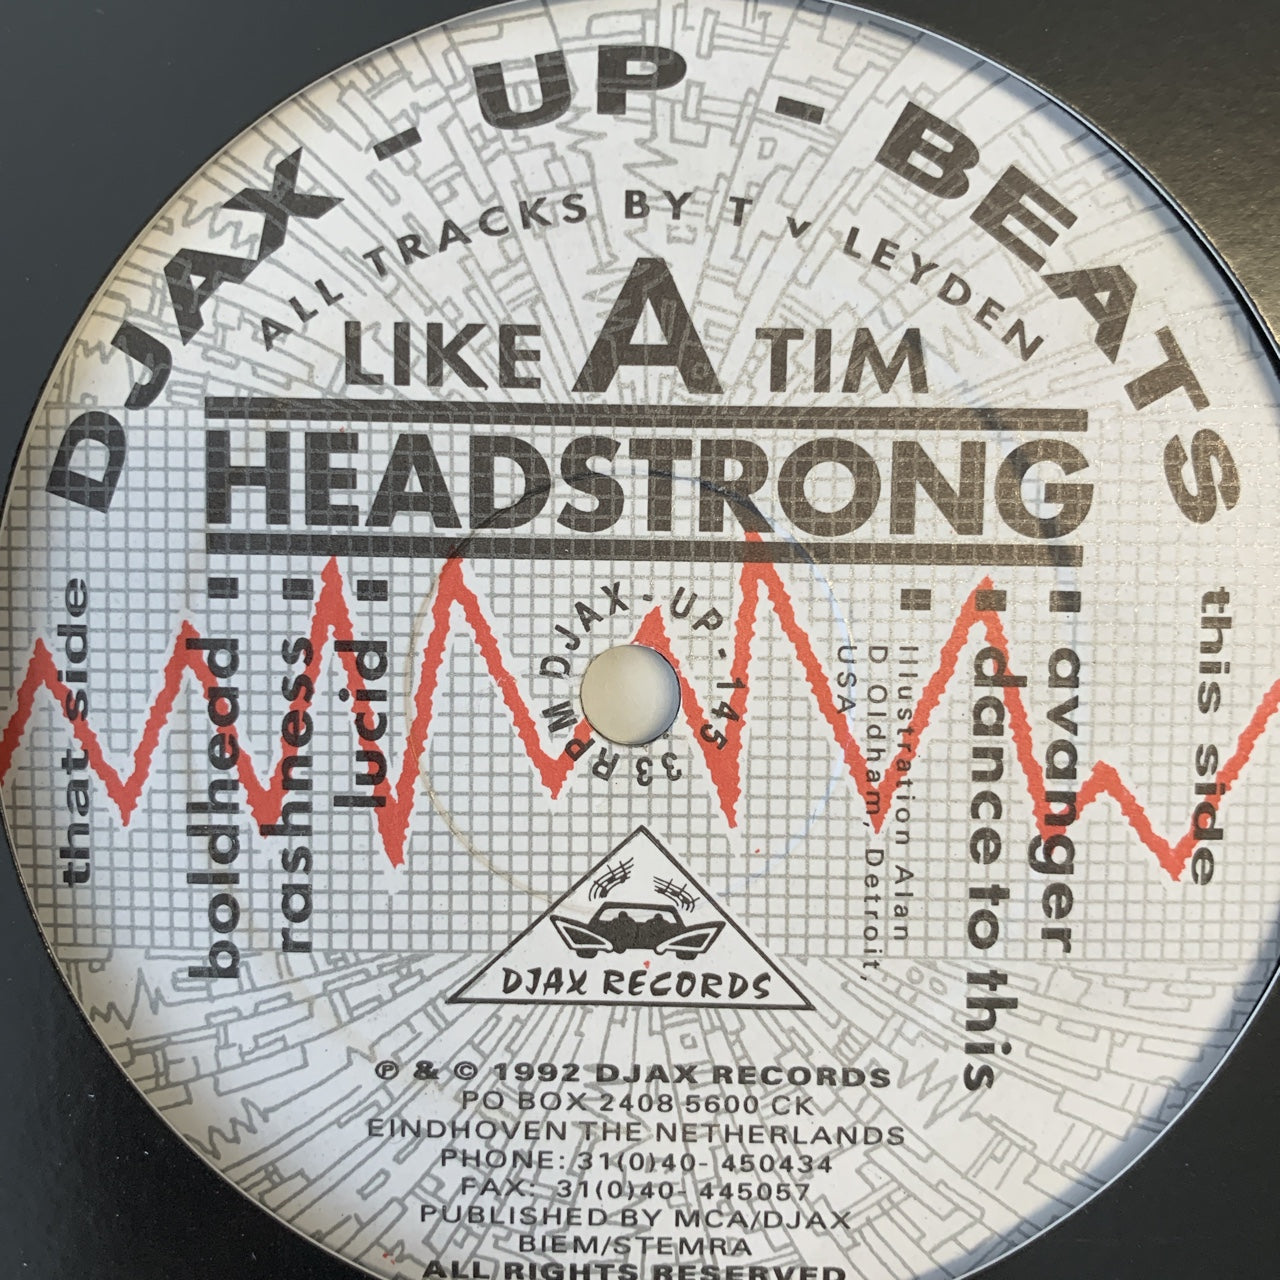 Tim Van Leyden ‘Like A Tim Headstrong’ Ep 5 Track 12inch Vinyl Single on DJAX